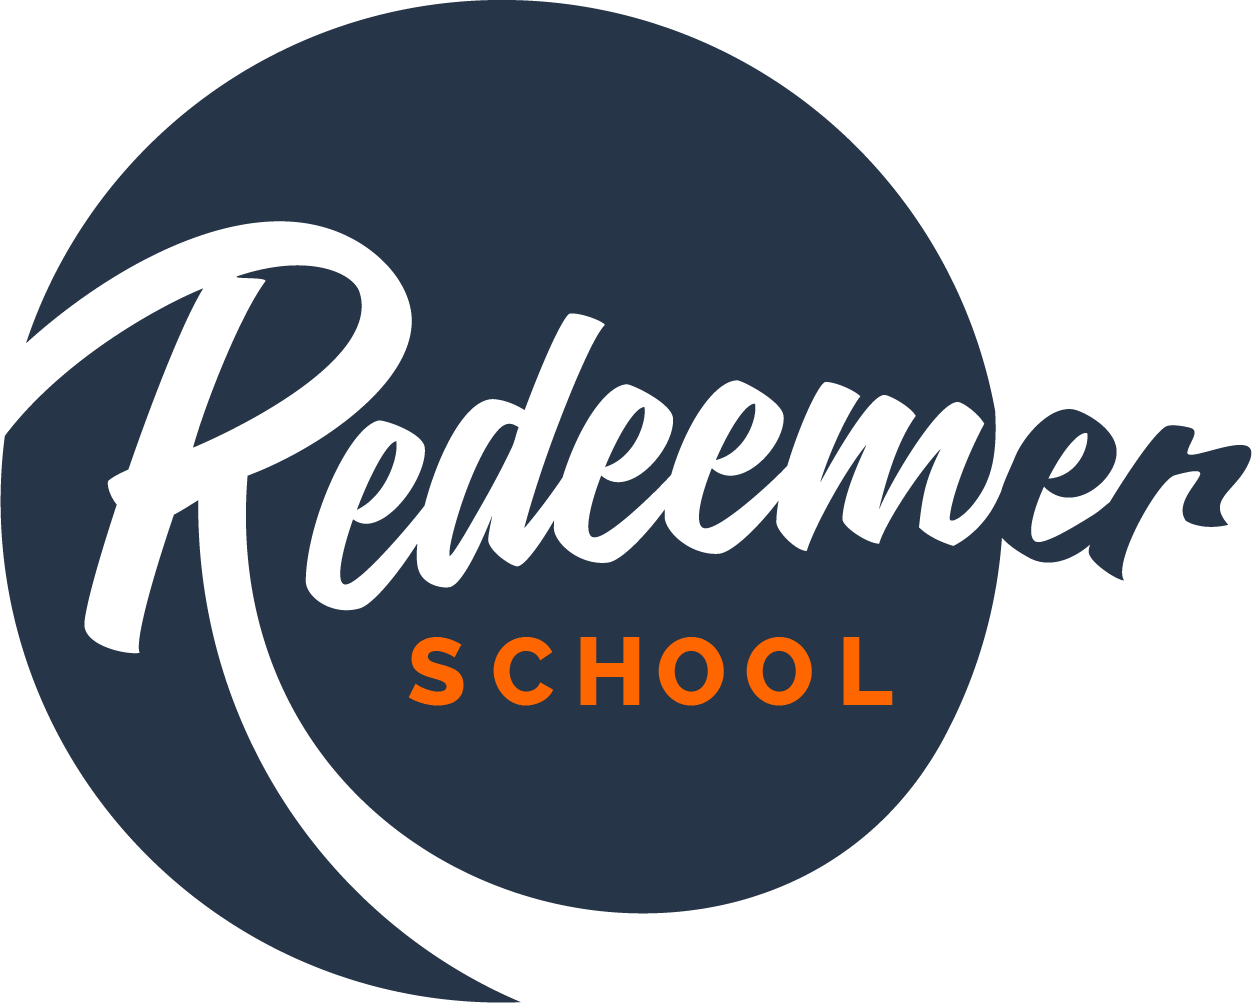 Redeemer School logo.png